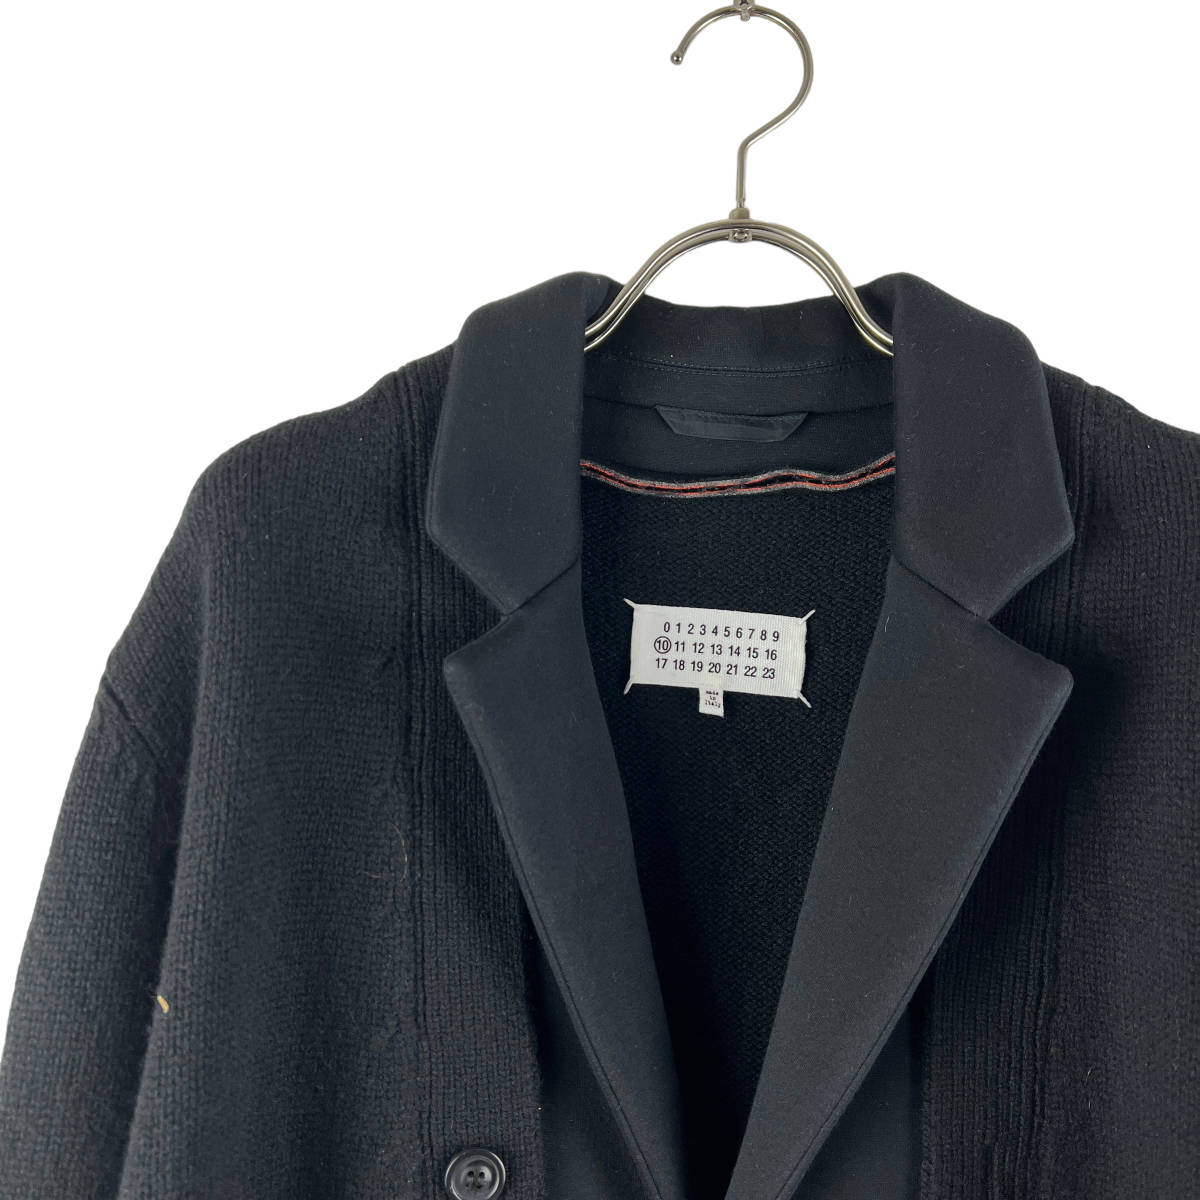 Maison Margiela (メゾン マルジェラ) Jacket Rebuilding Design Knit Cardigan (black)